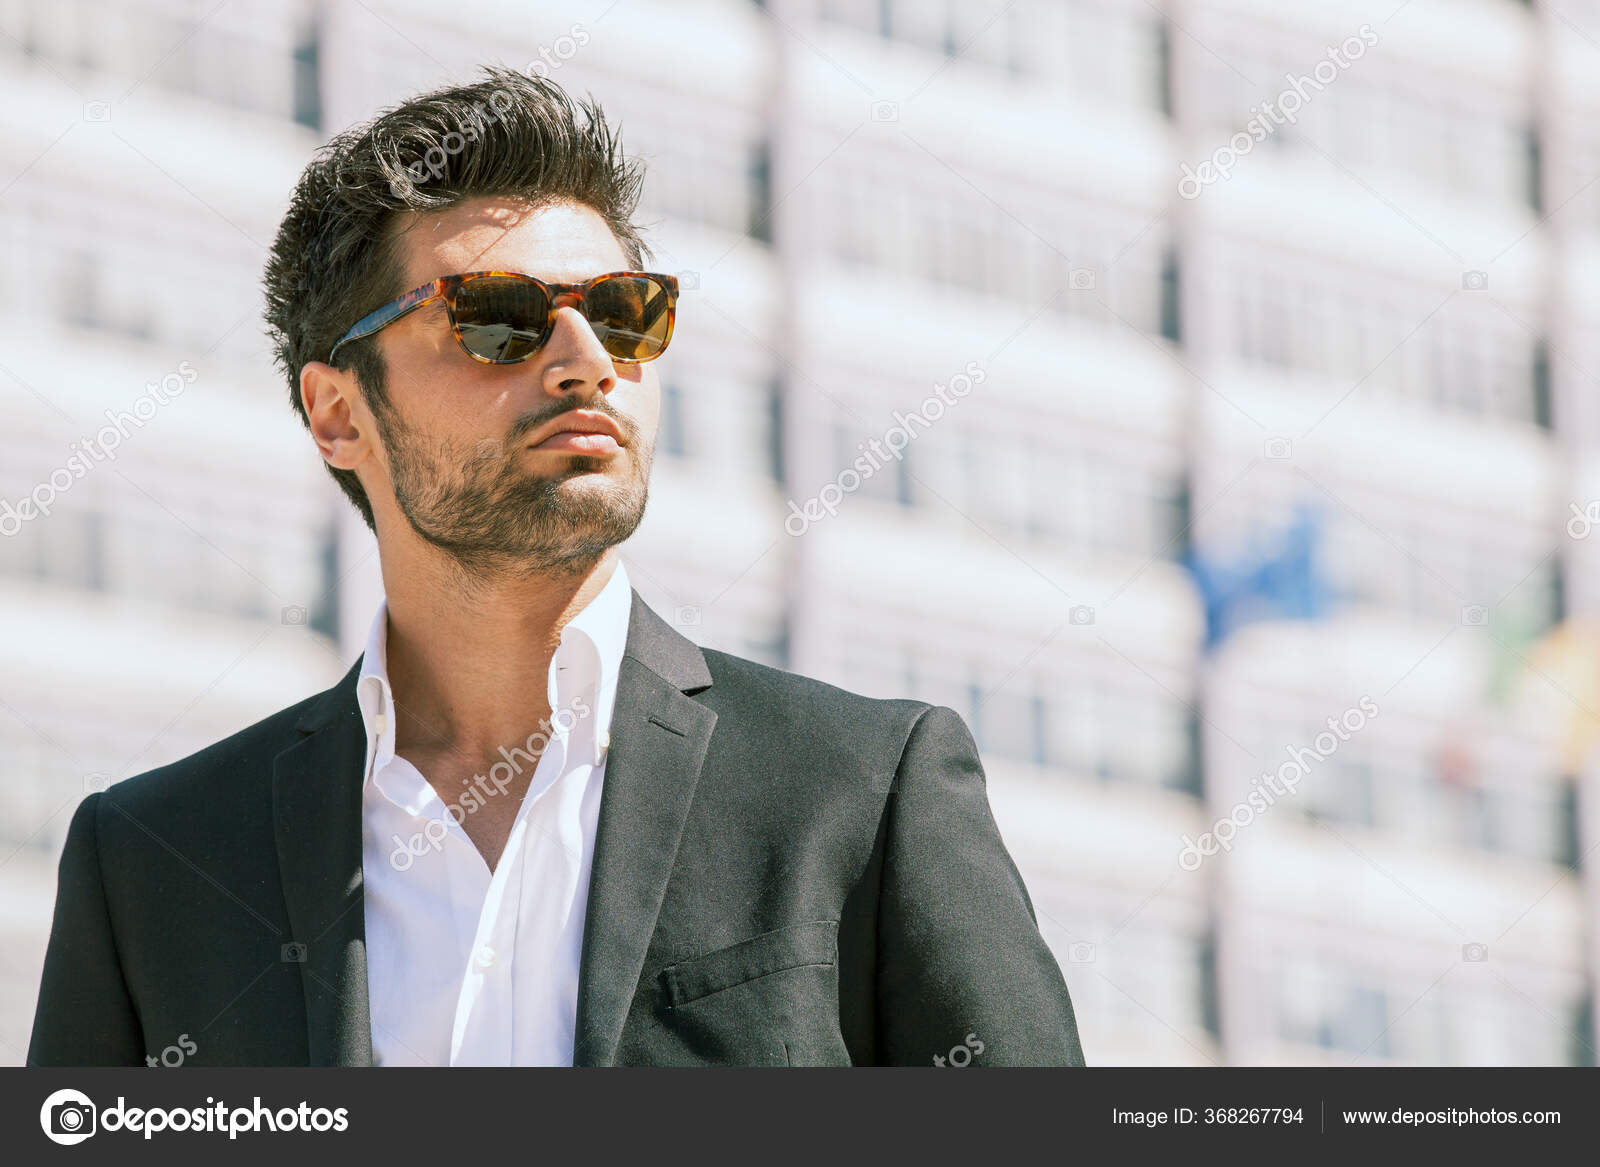 https://st3.depositphotos.com/2570035/36826/i/1600/depositphotos_368267794-stock-photo-sexy-gorgeous-stylish-man-sunglasses.jpg